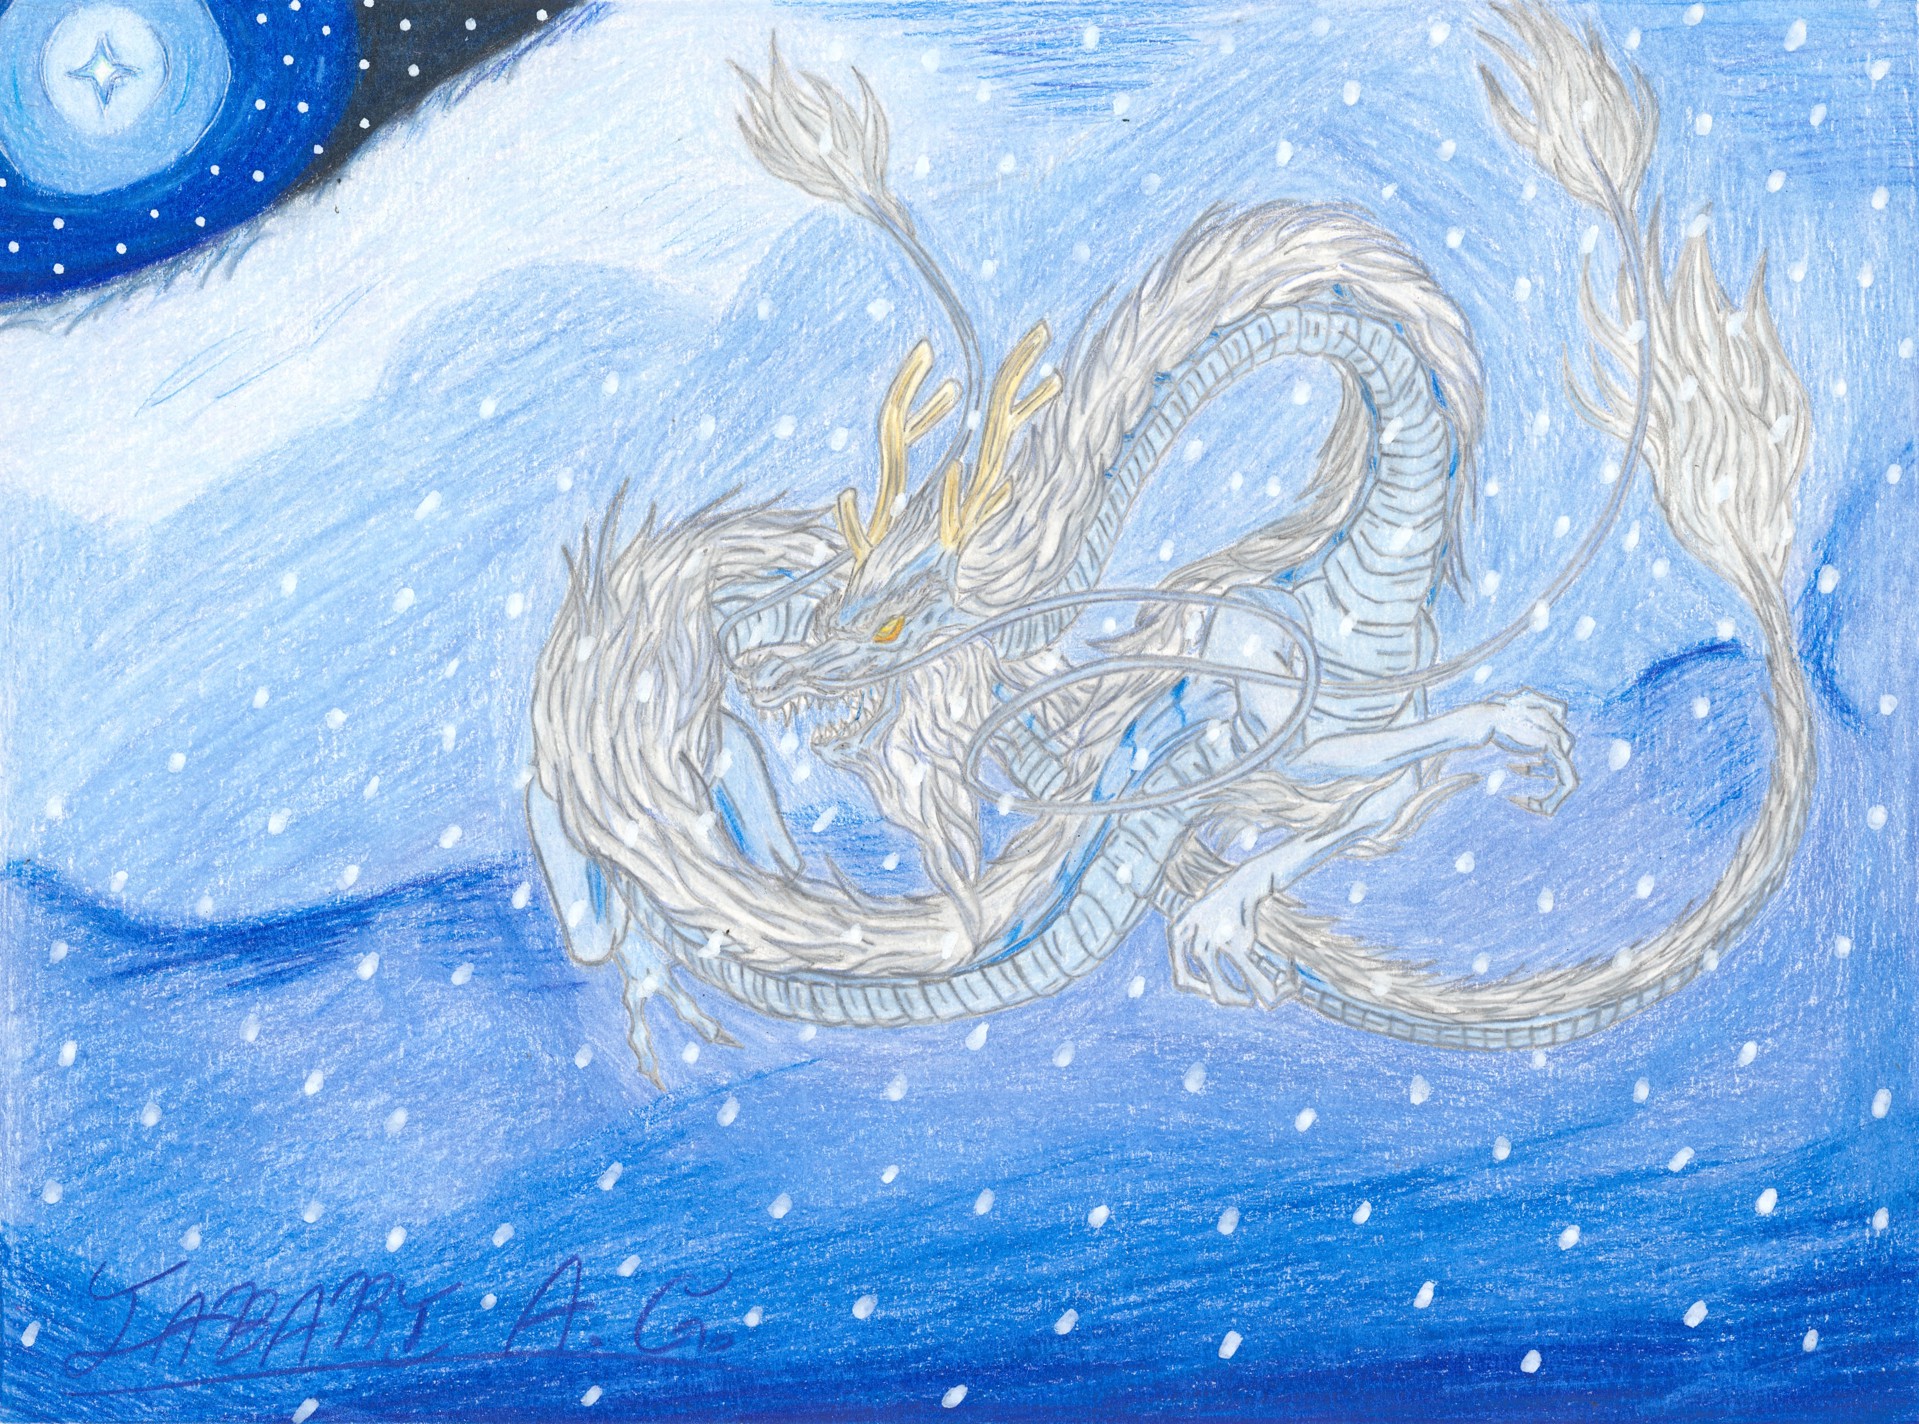 Rasenryu, The Christmas Dragon by Jabari Cooper